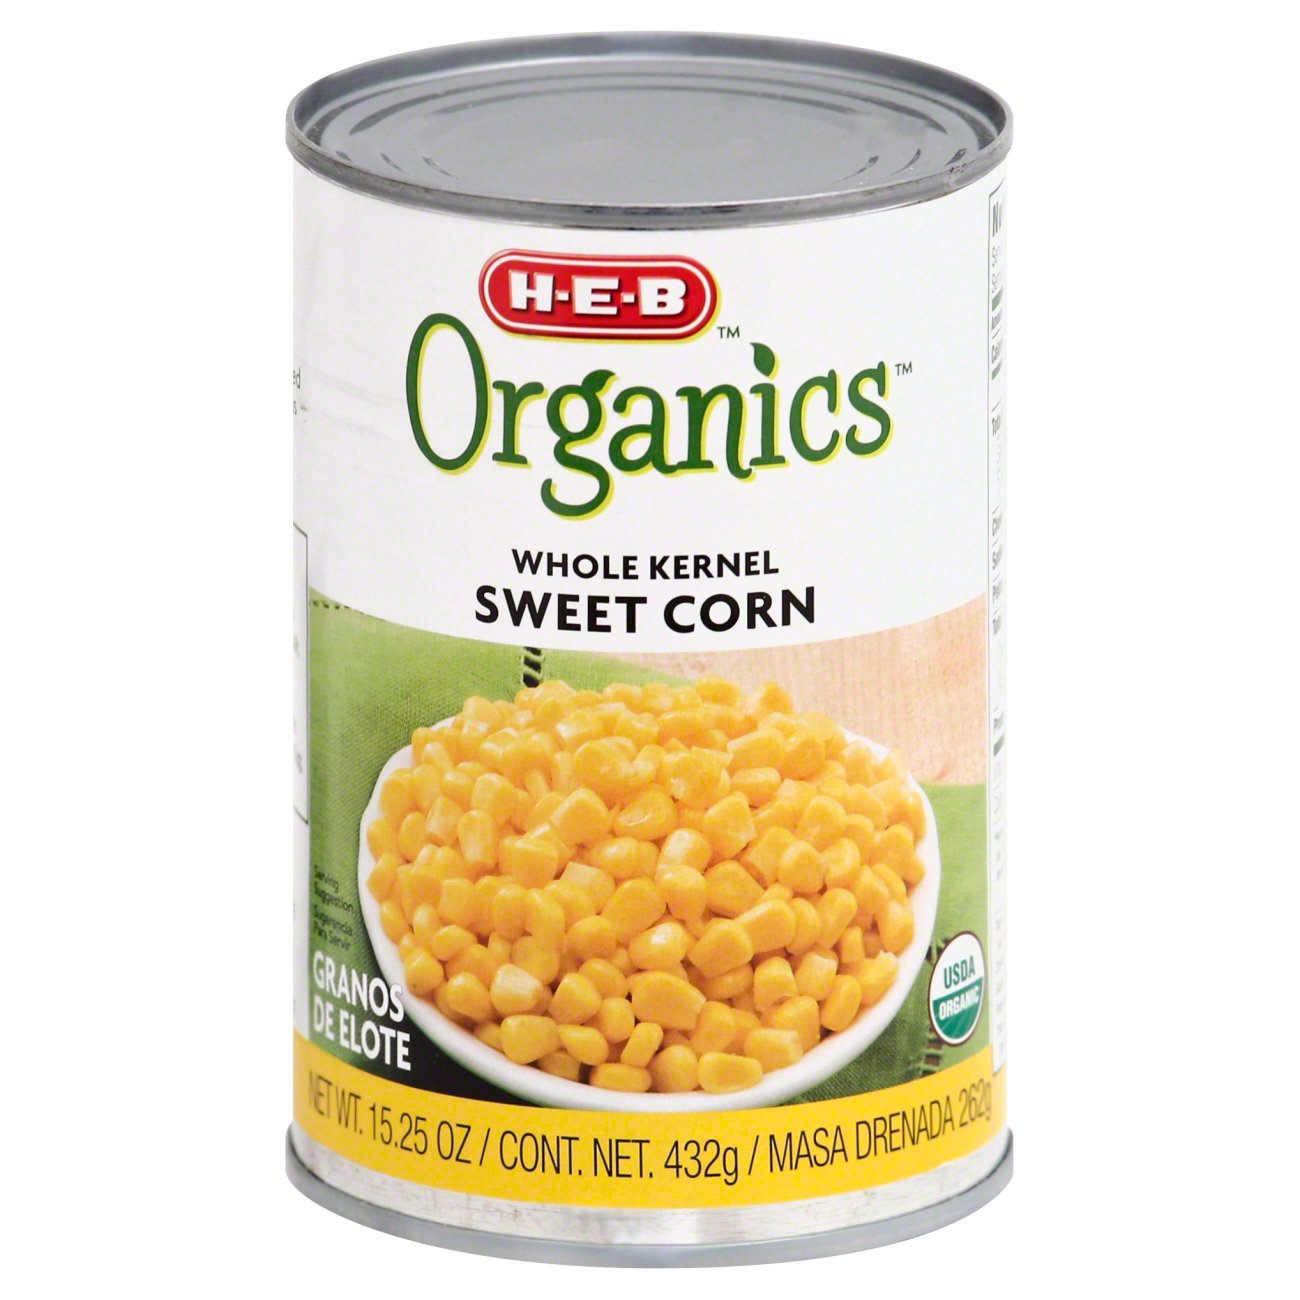 H-E-B Organics Whole Kernel Sweet Corn - Shop Vegetables at H-E-B